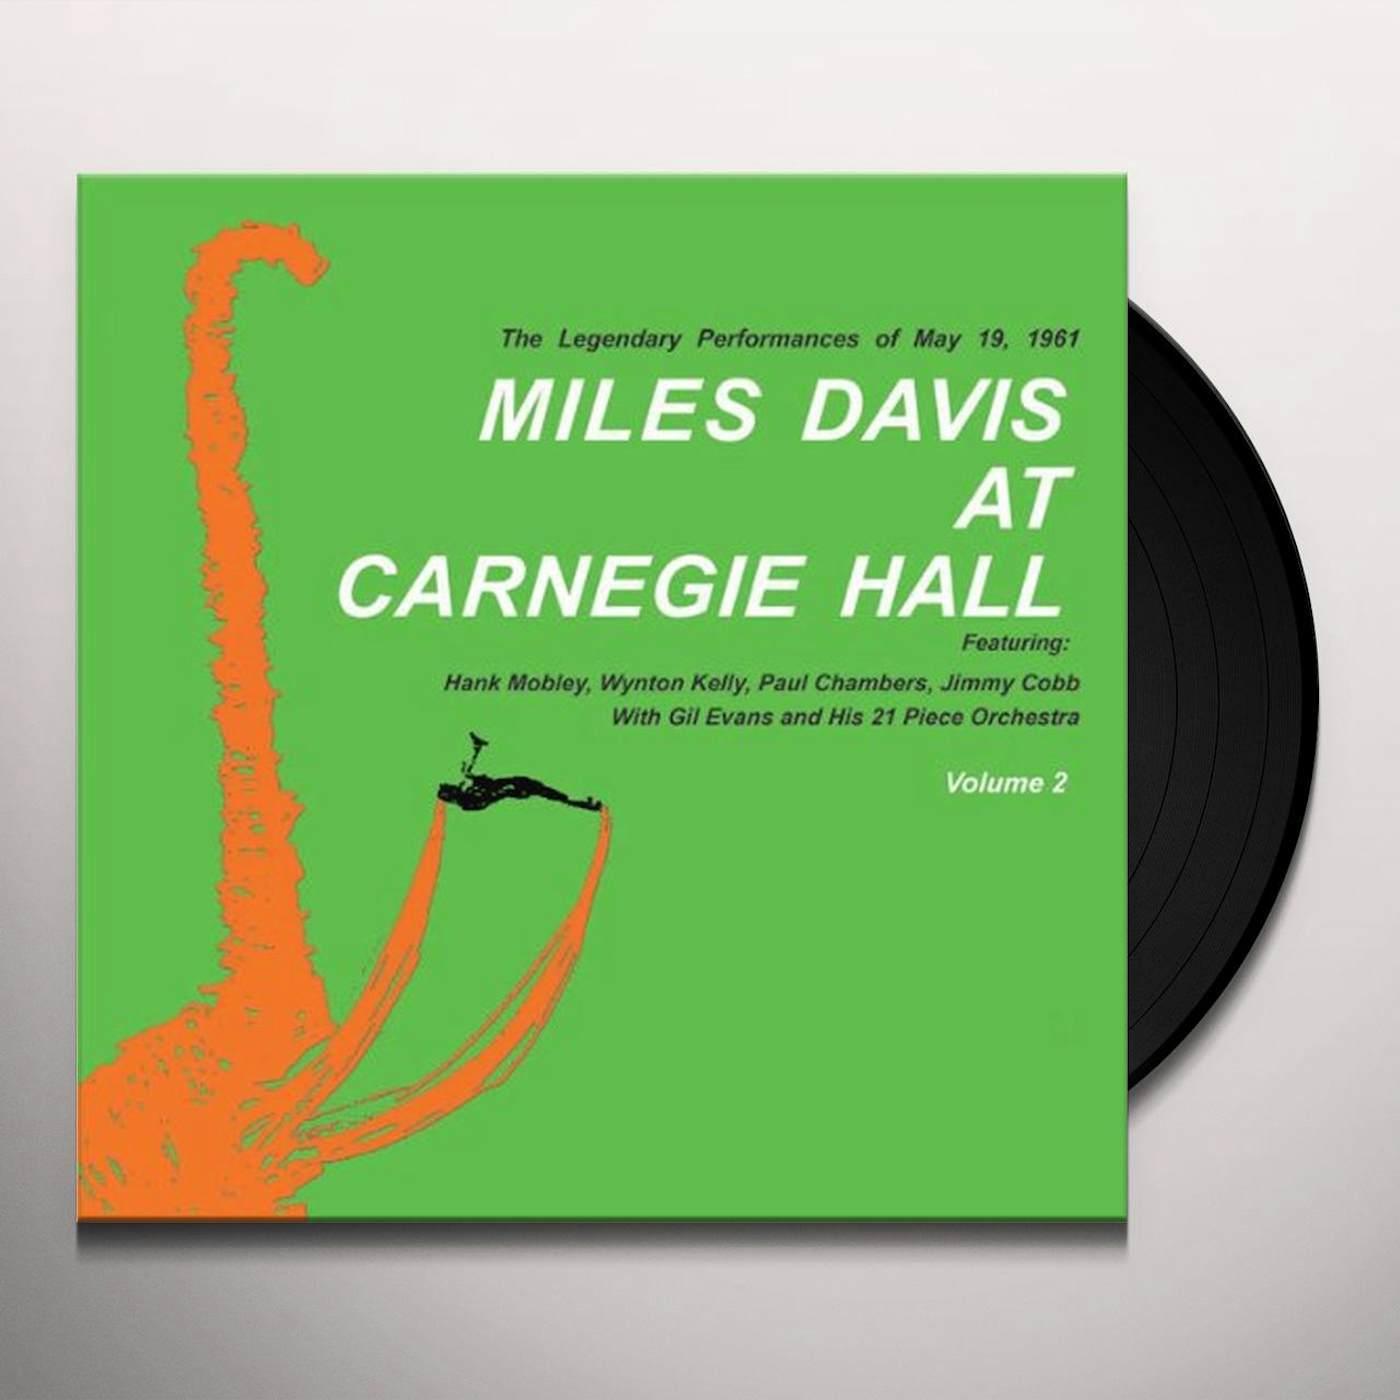 MILES DAVIS AT CARNEGIE HALL 2 Vinyl Record